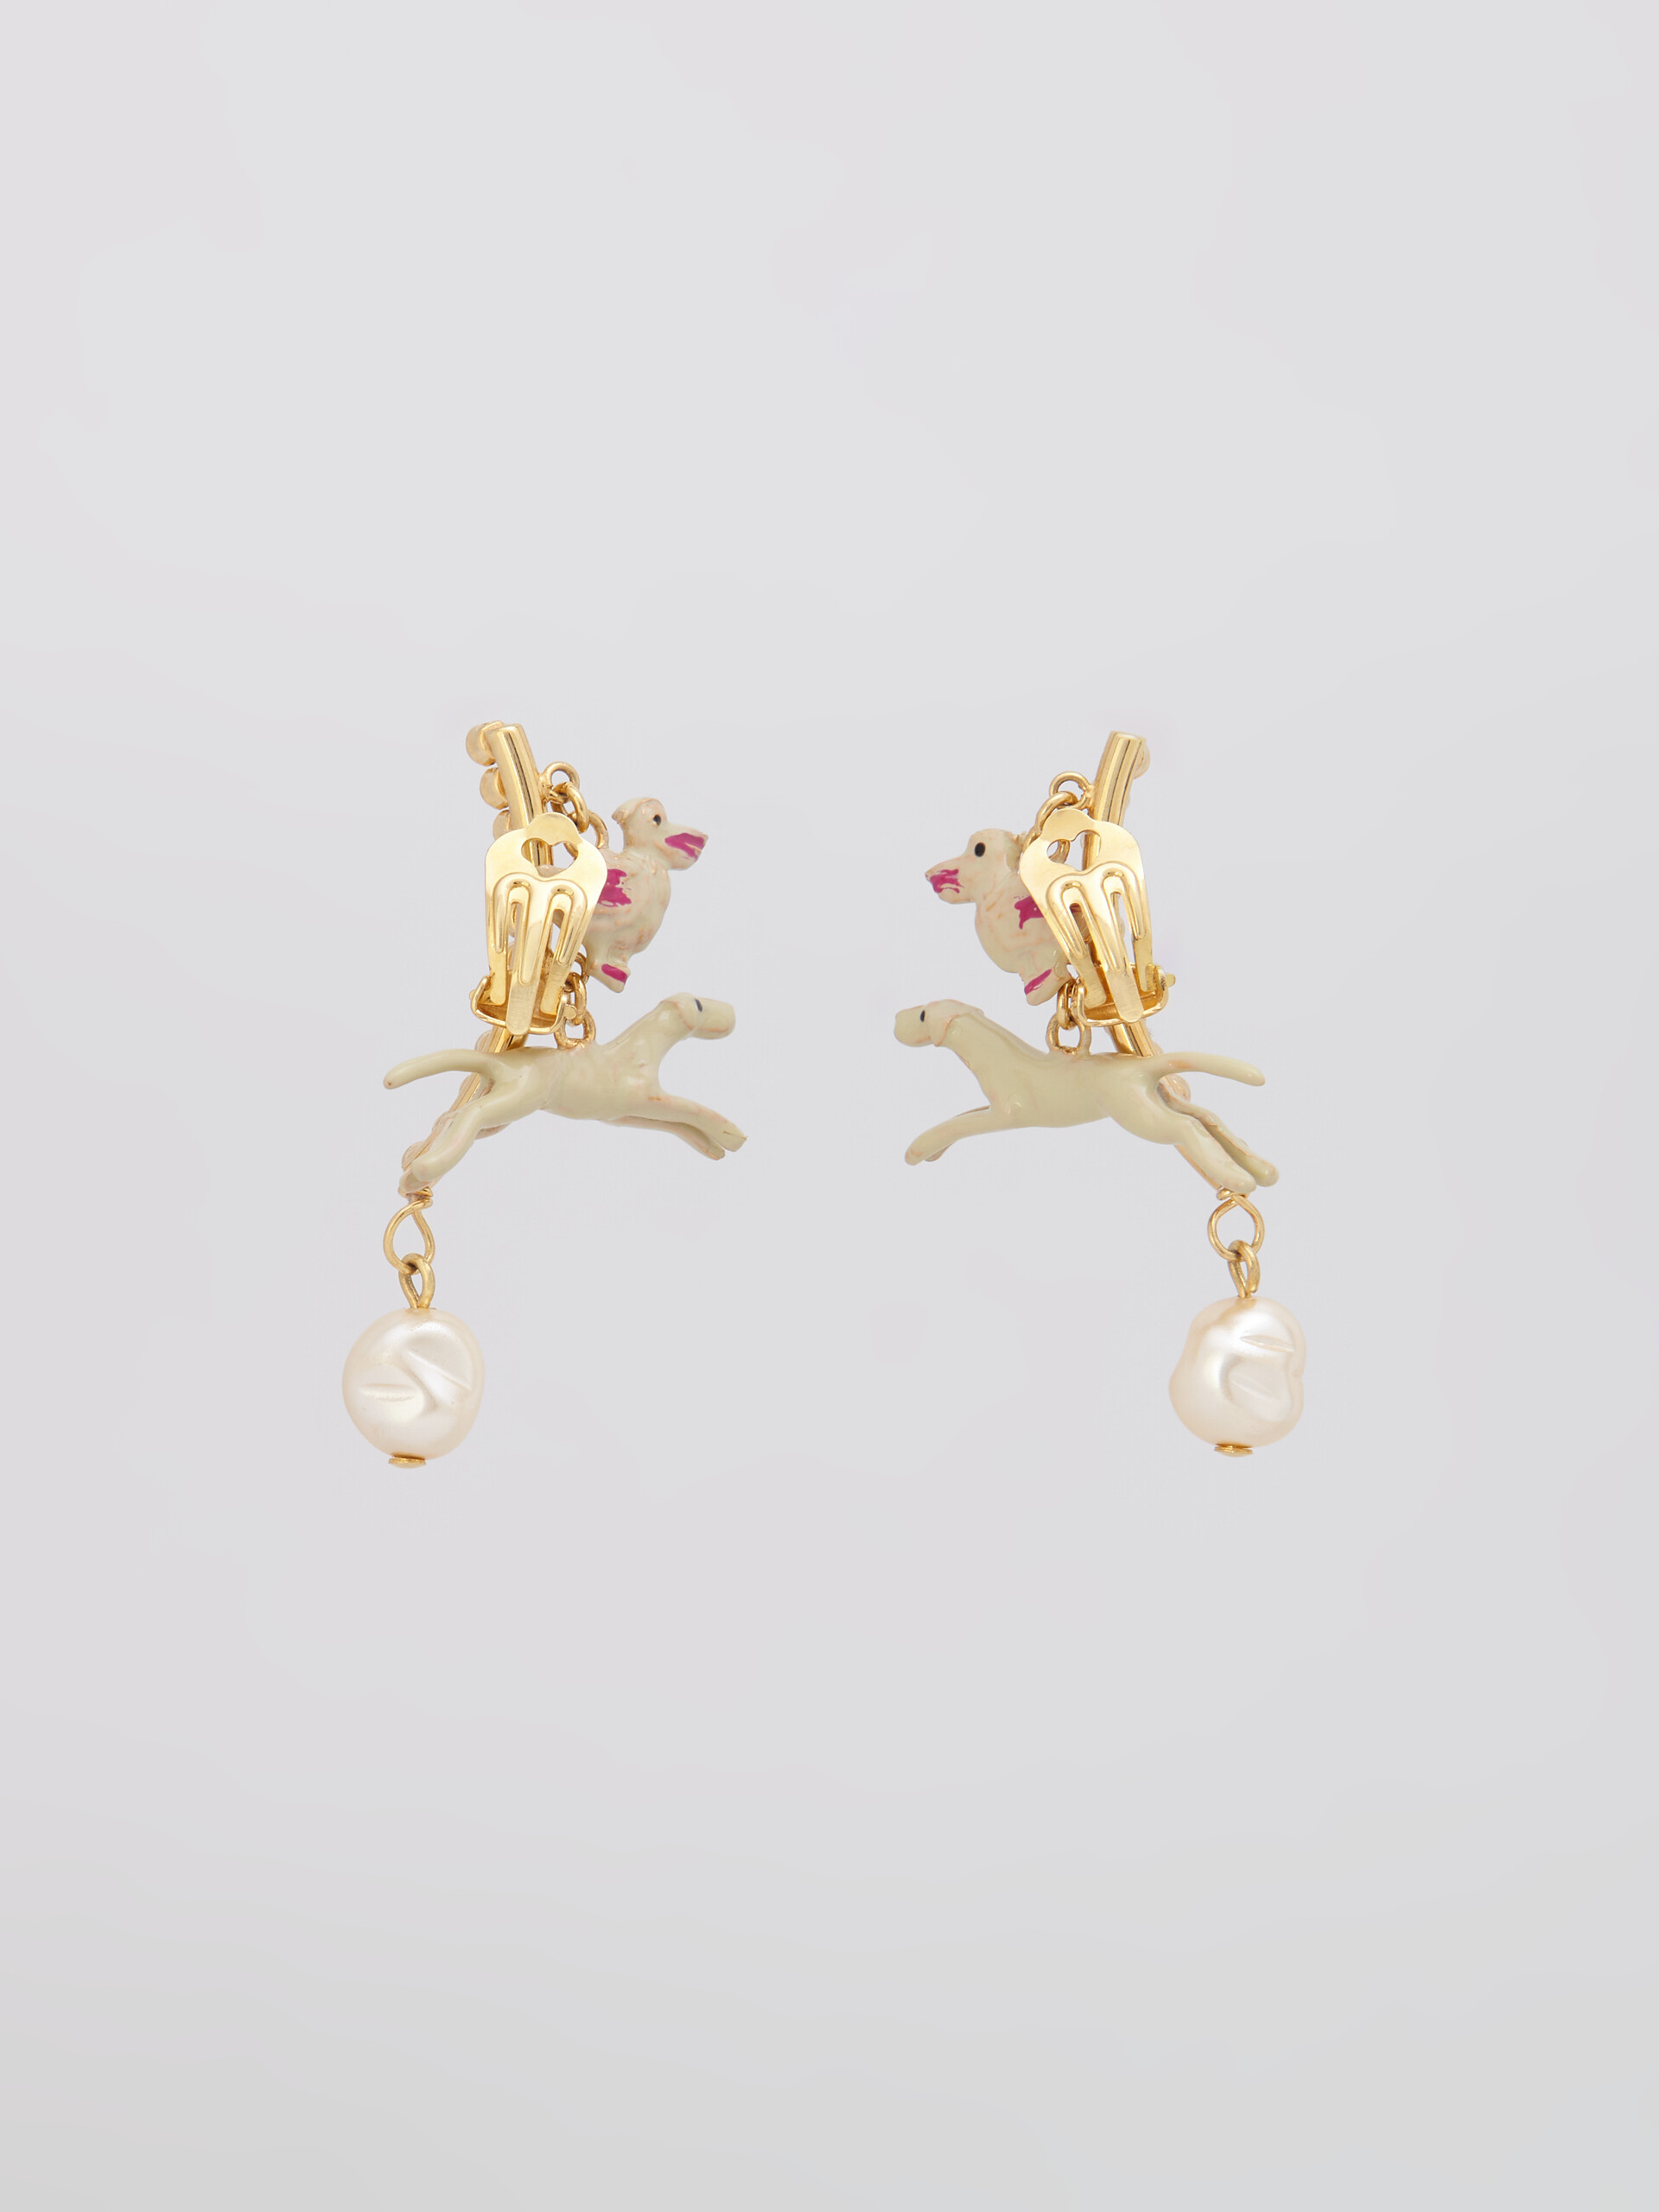 Brass FOUND TREASURES greyhound earrings - Earrings - Image 3